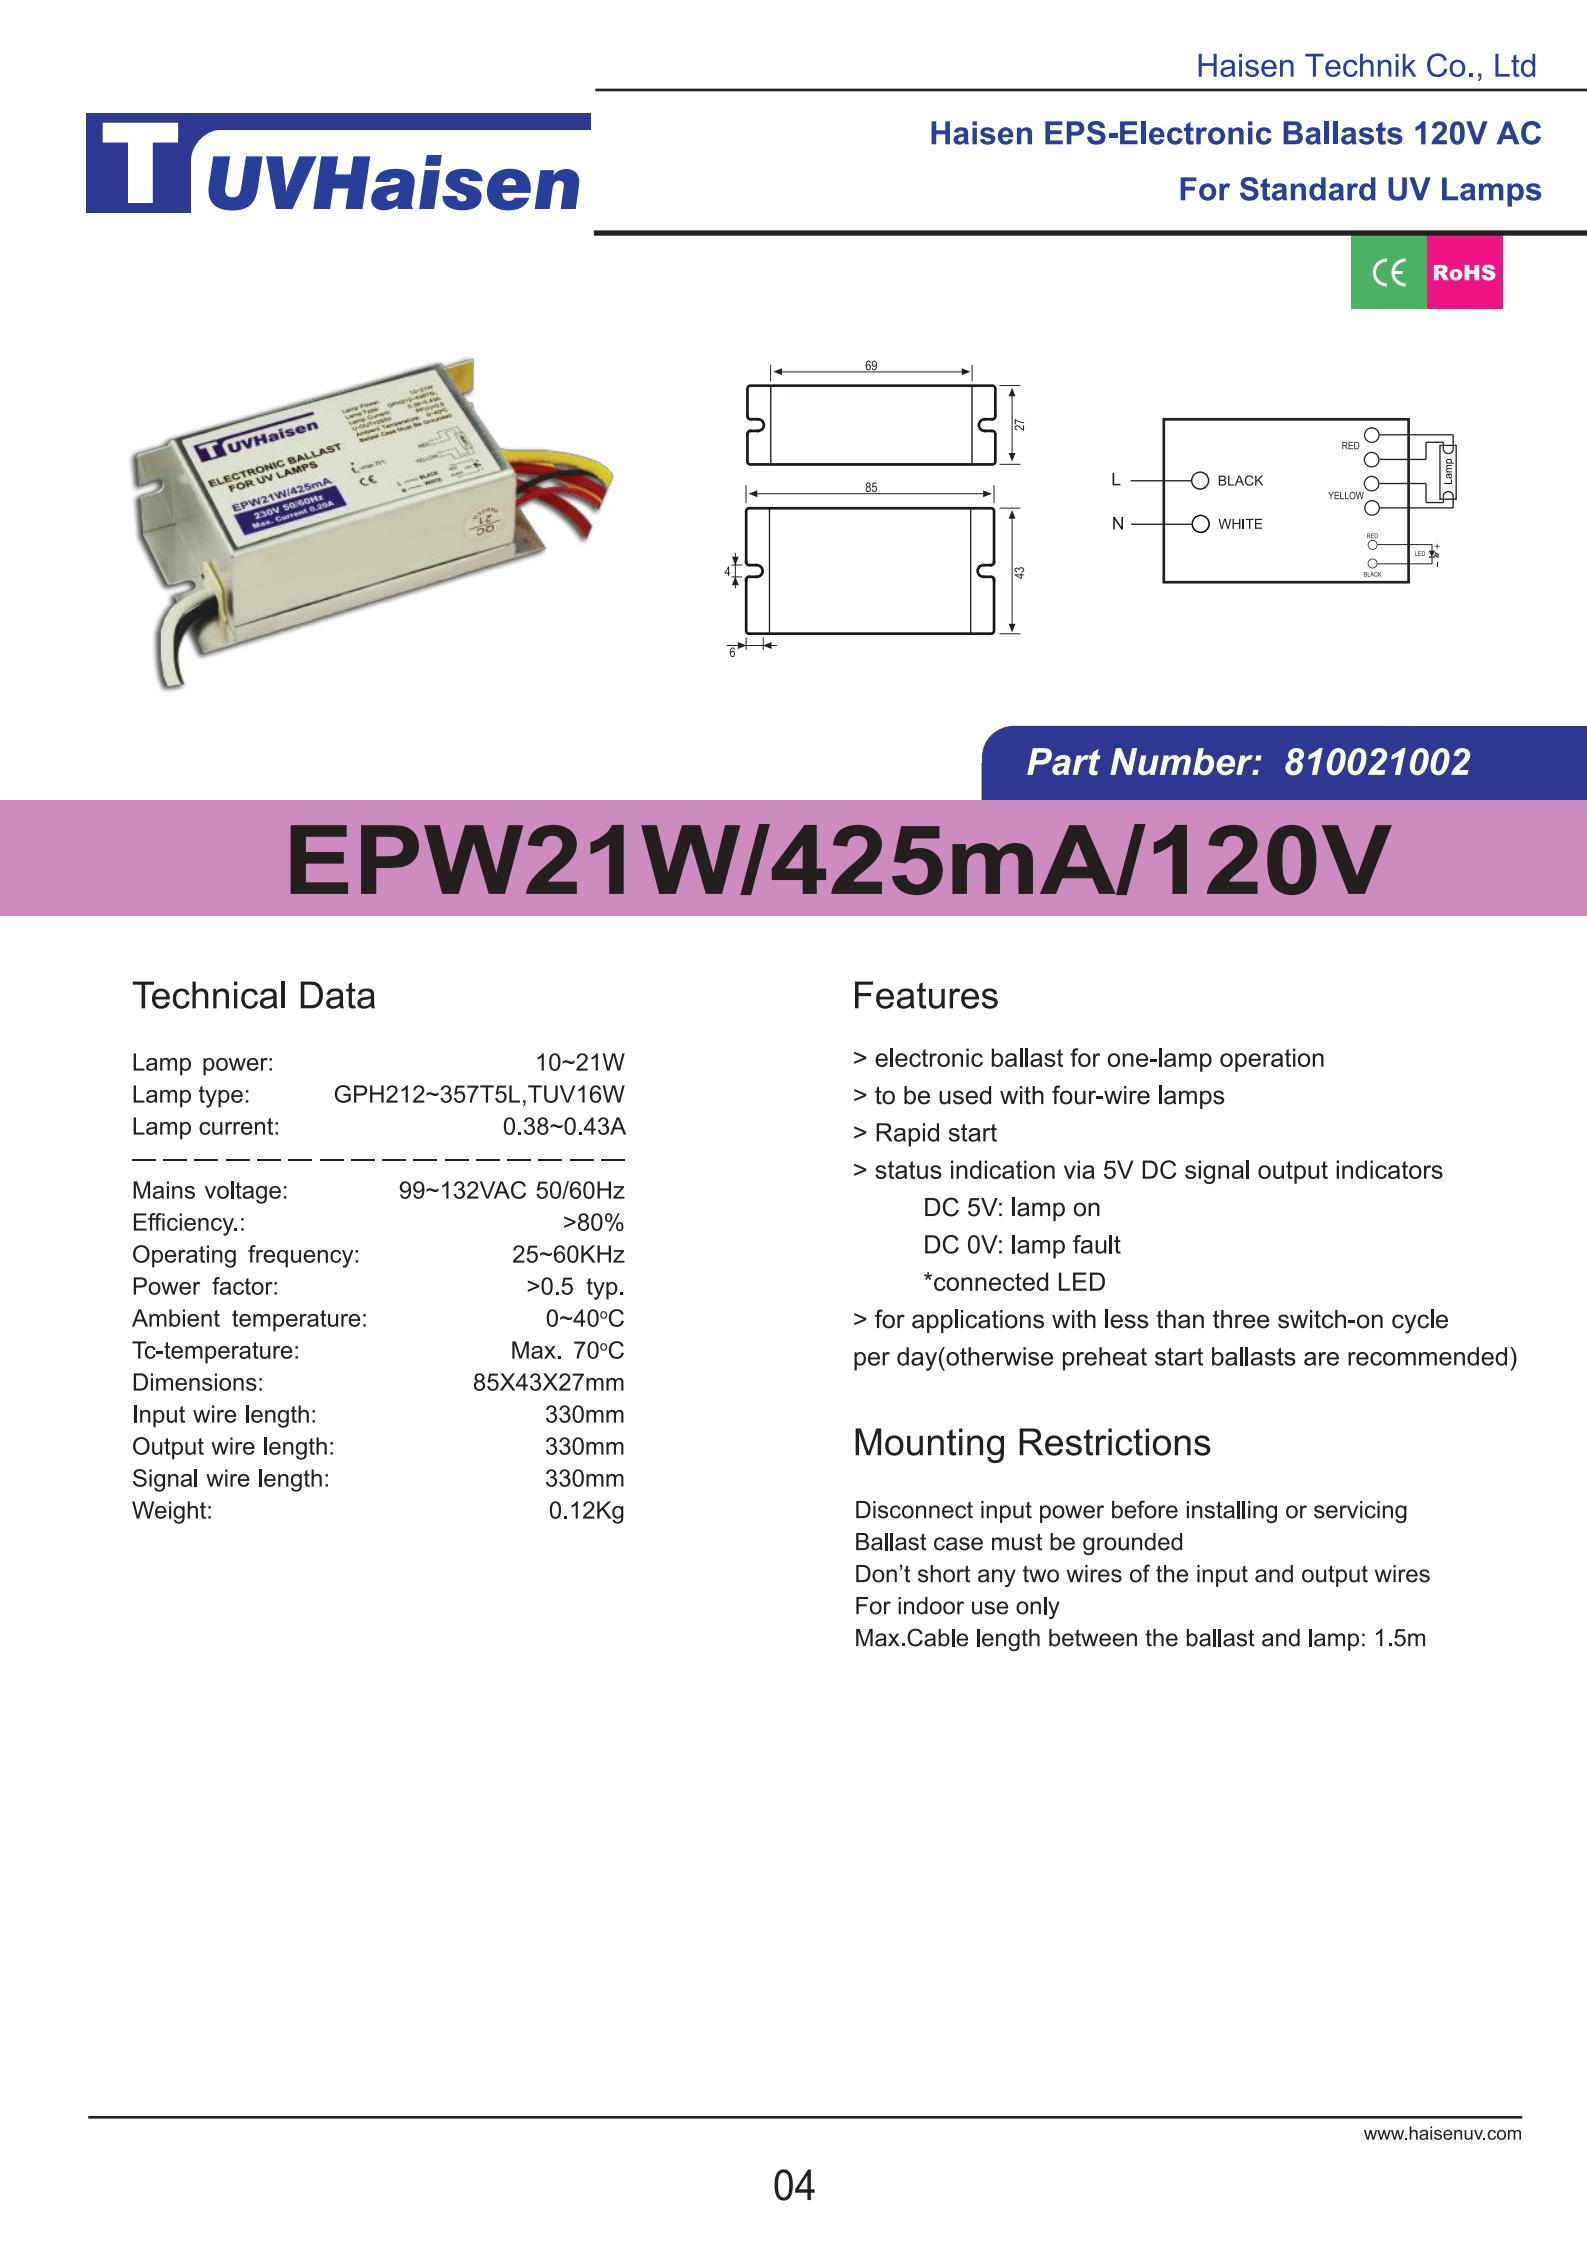  Ultraviolet Ballast EPW21W/425mA /120V for uv light